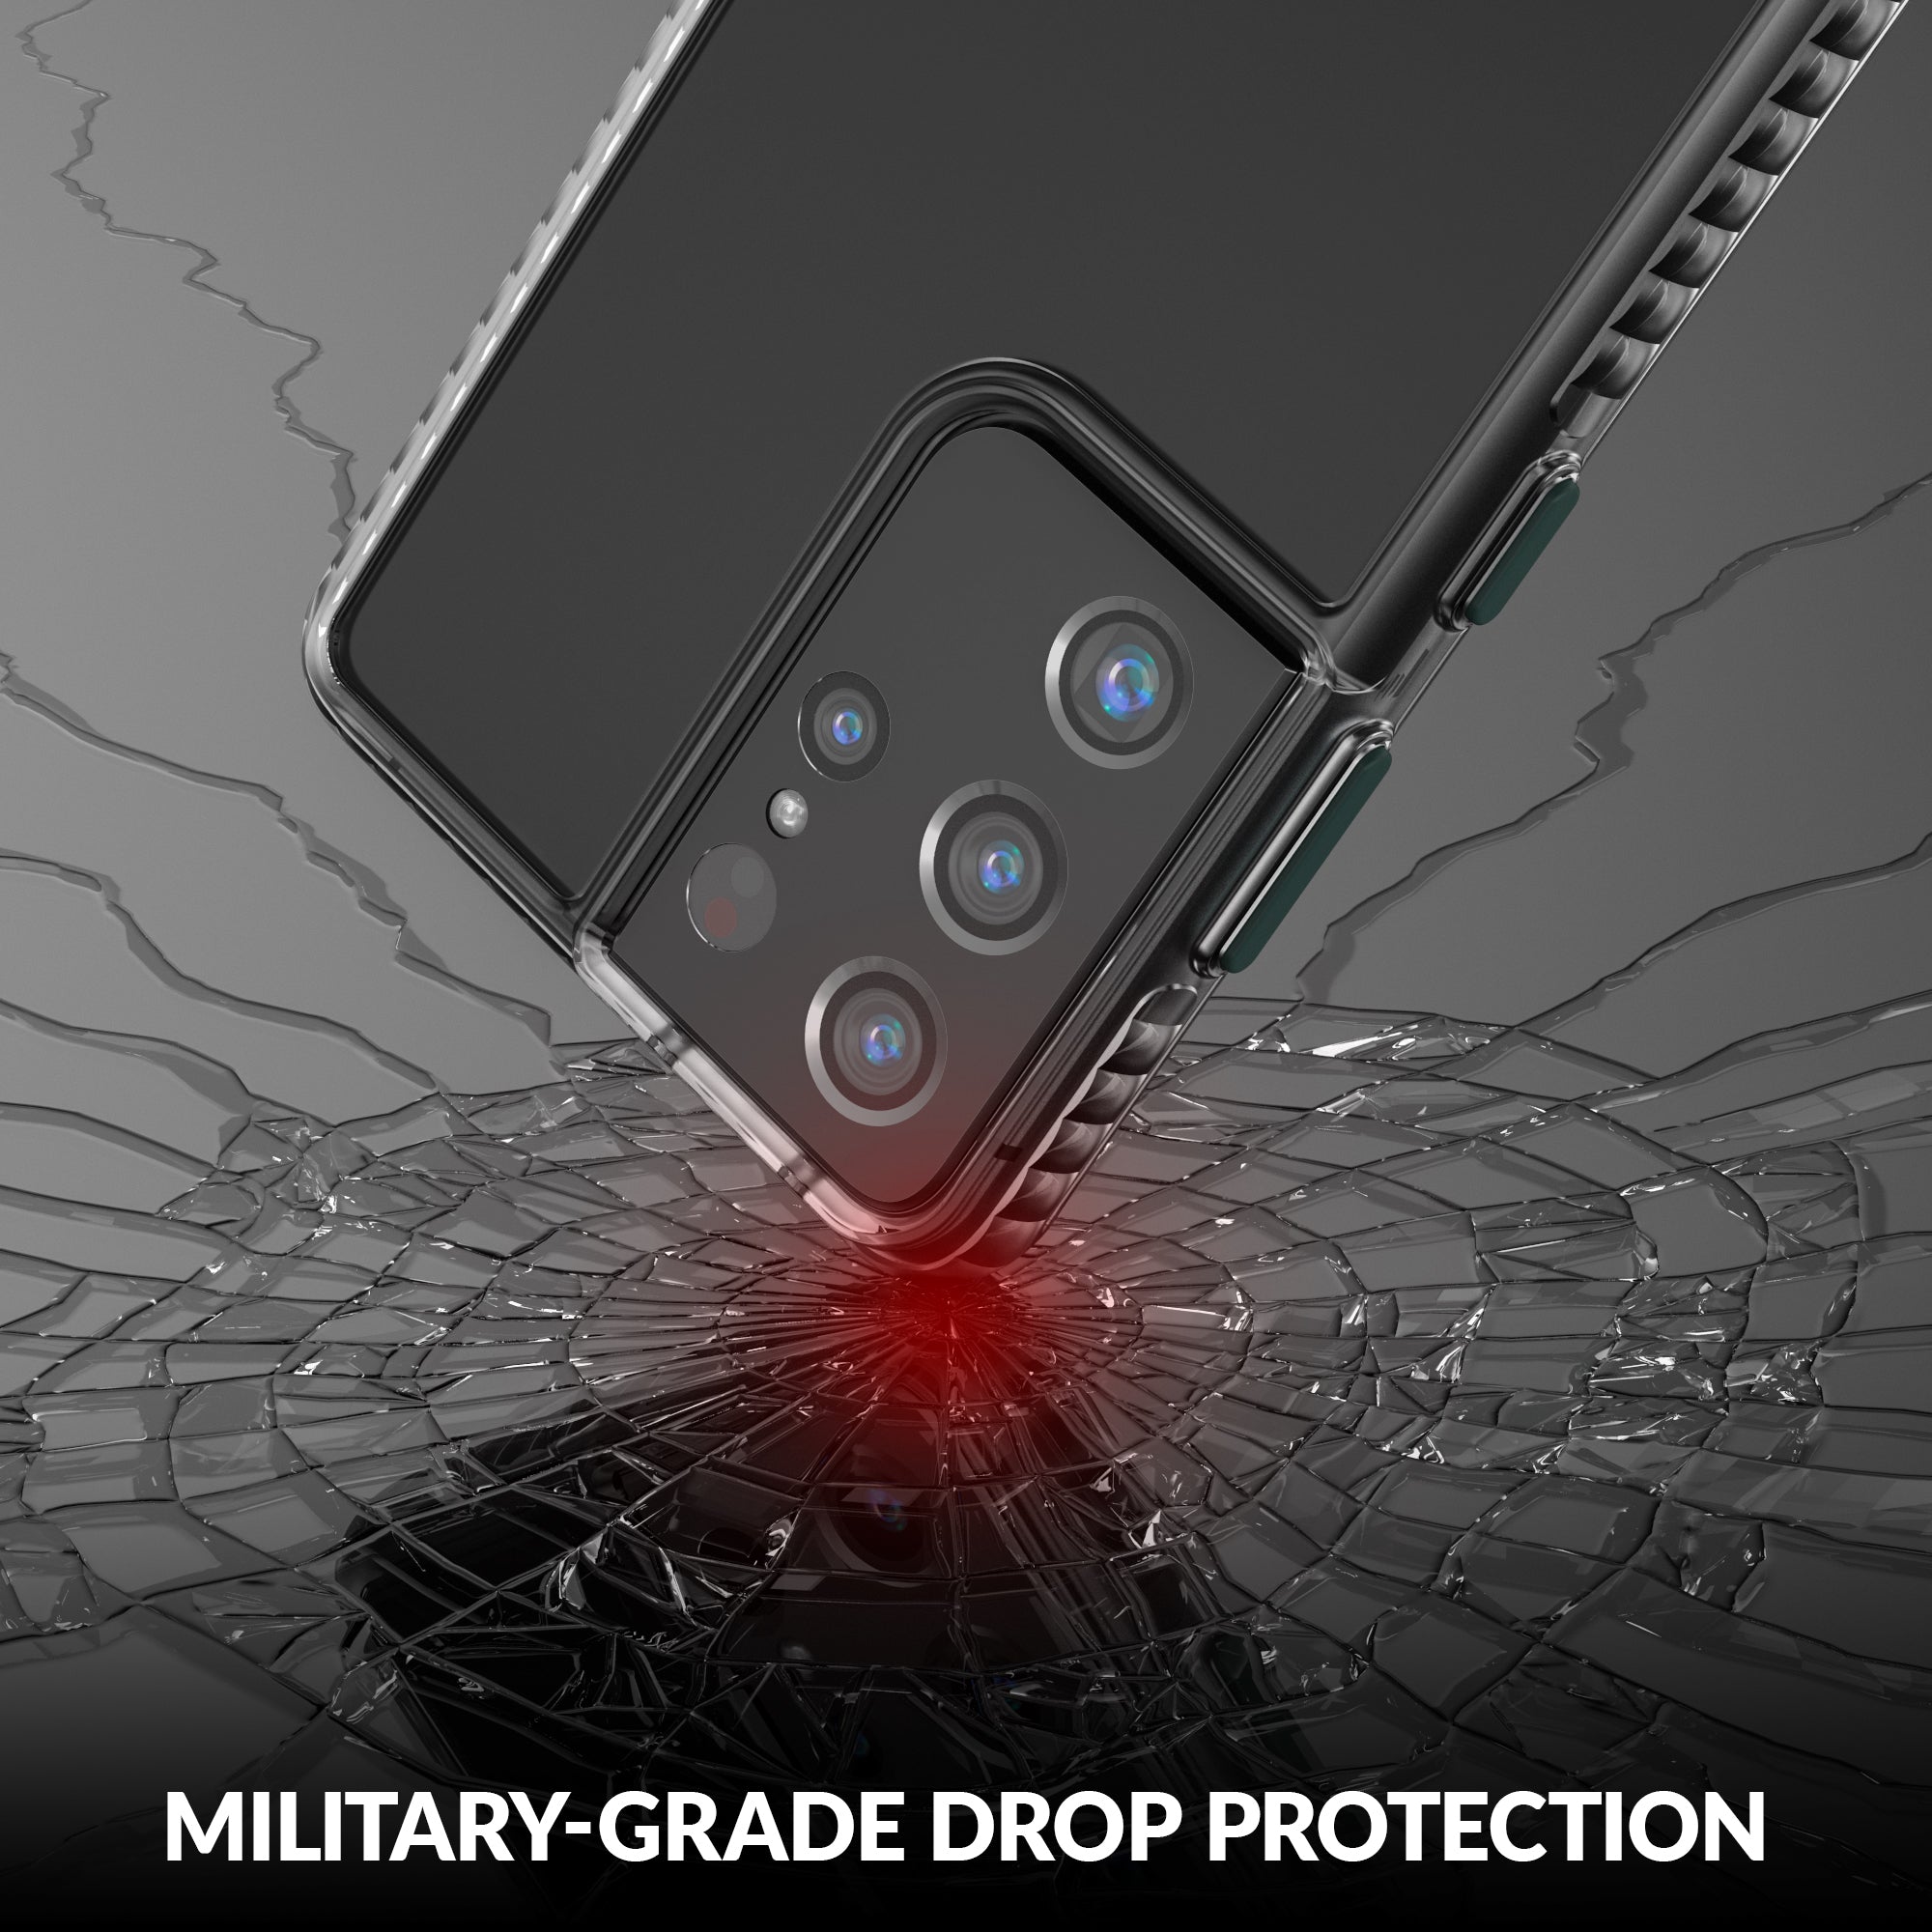 Galaxy S21 Ultra Case Clear Guard